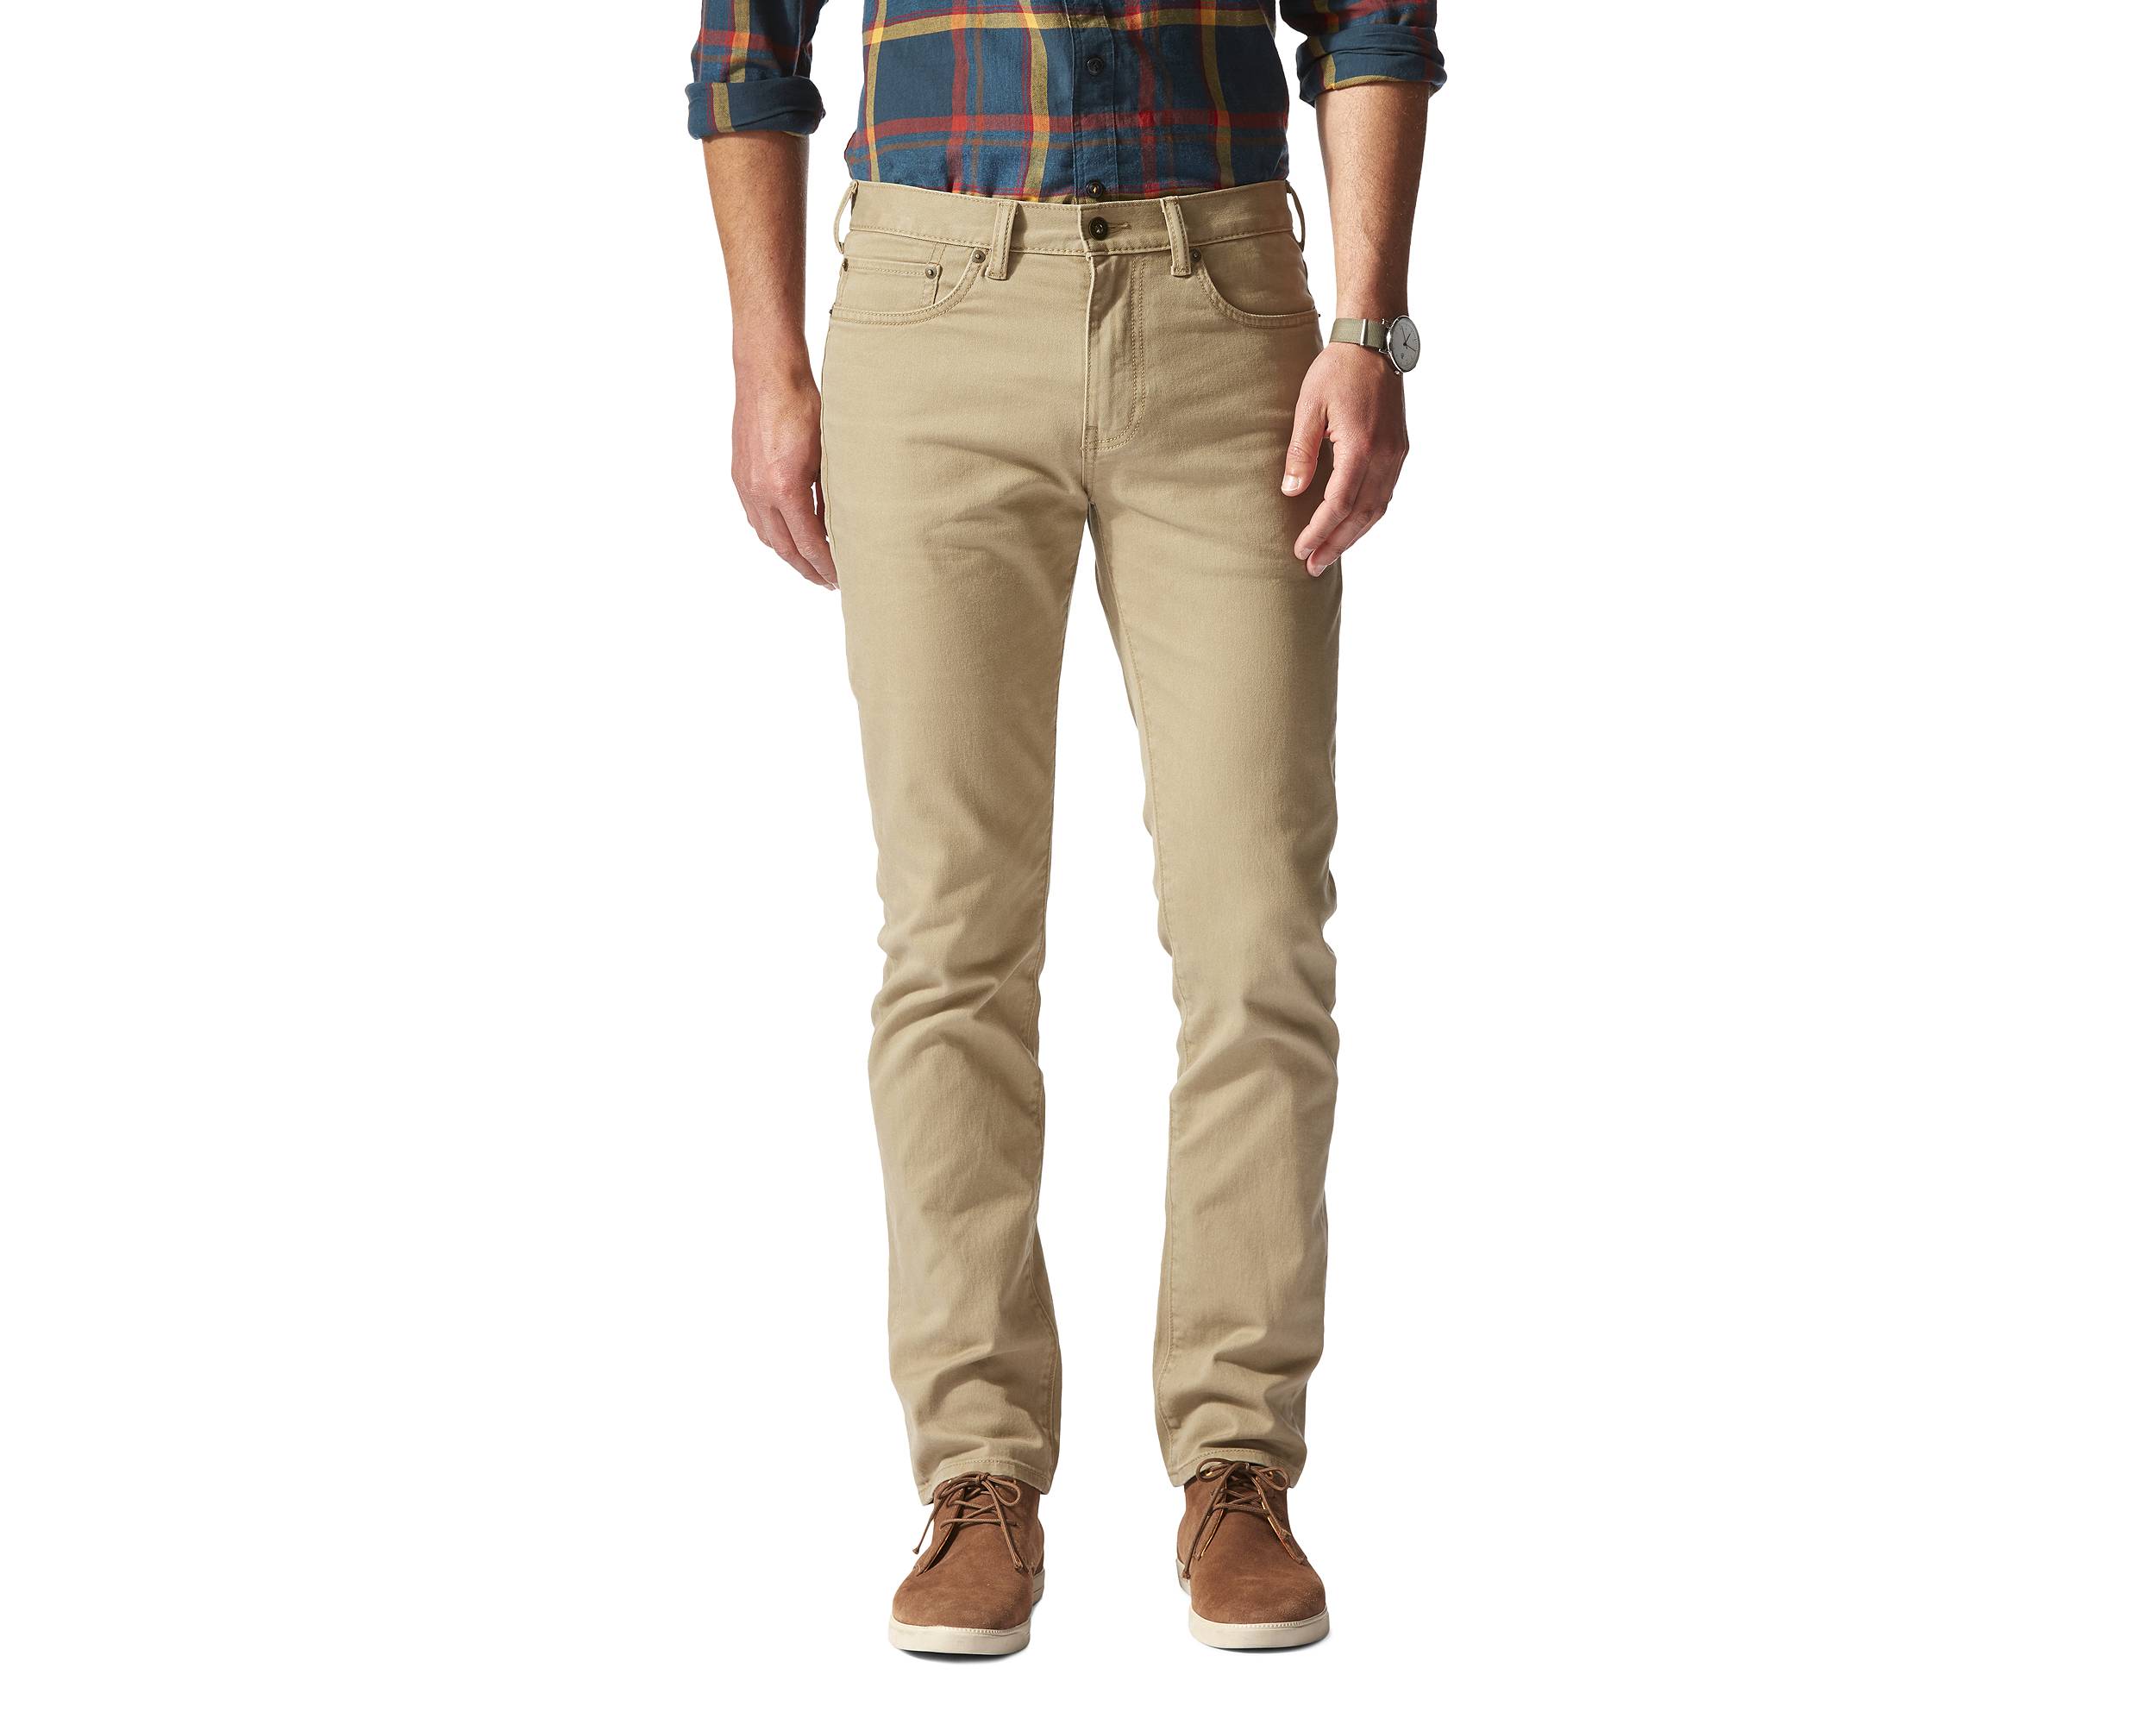 Khaki Jeans for Men - Shop Men's Khaki Jeans | Dockers®